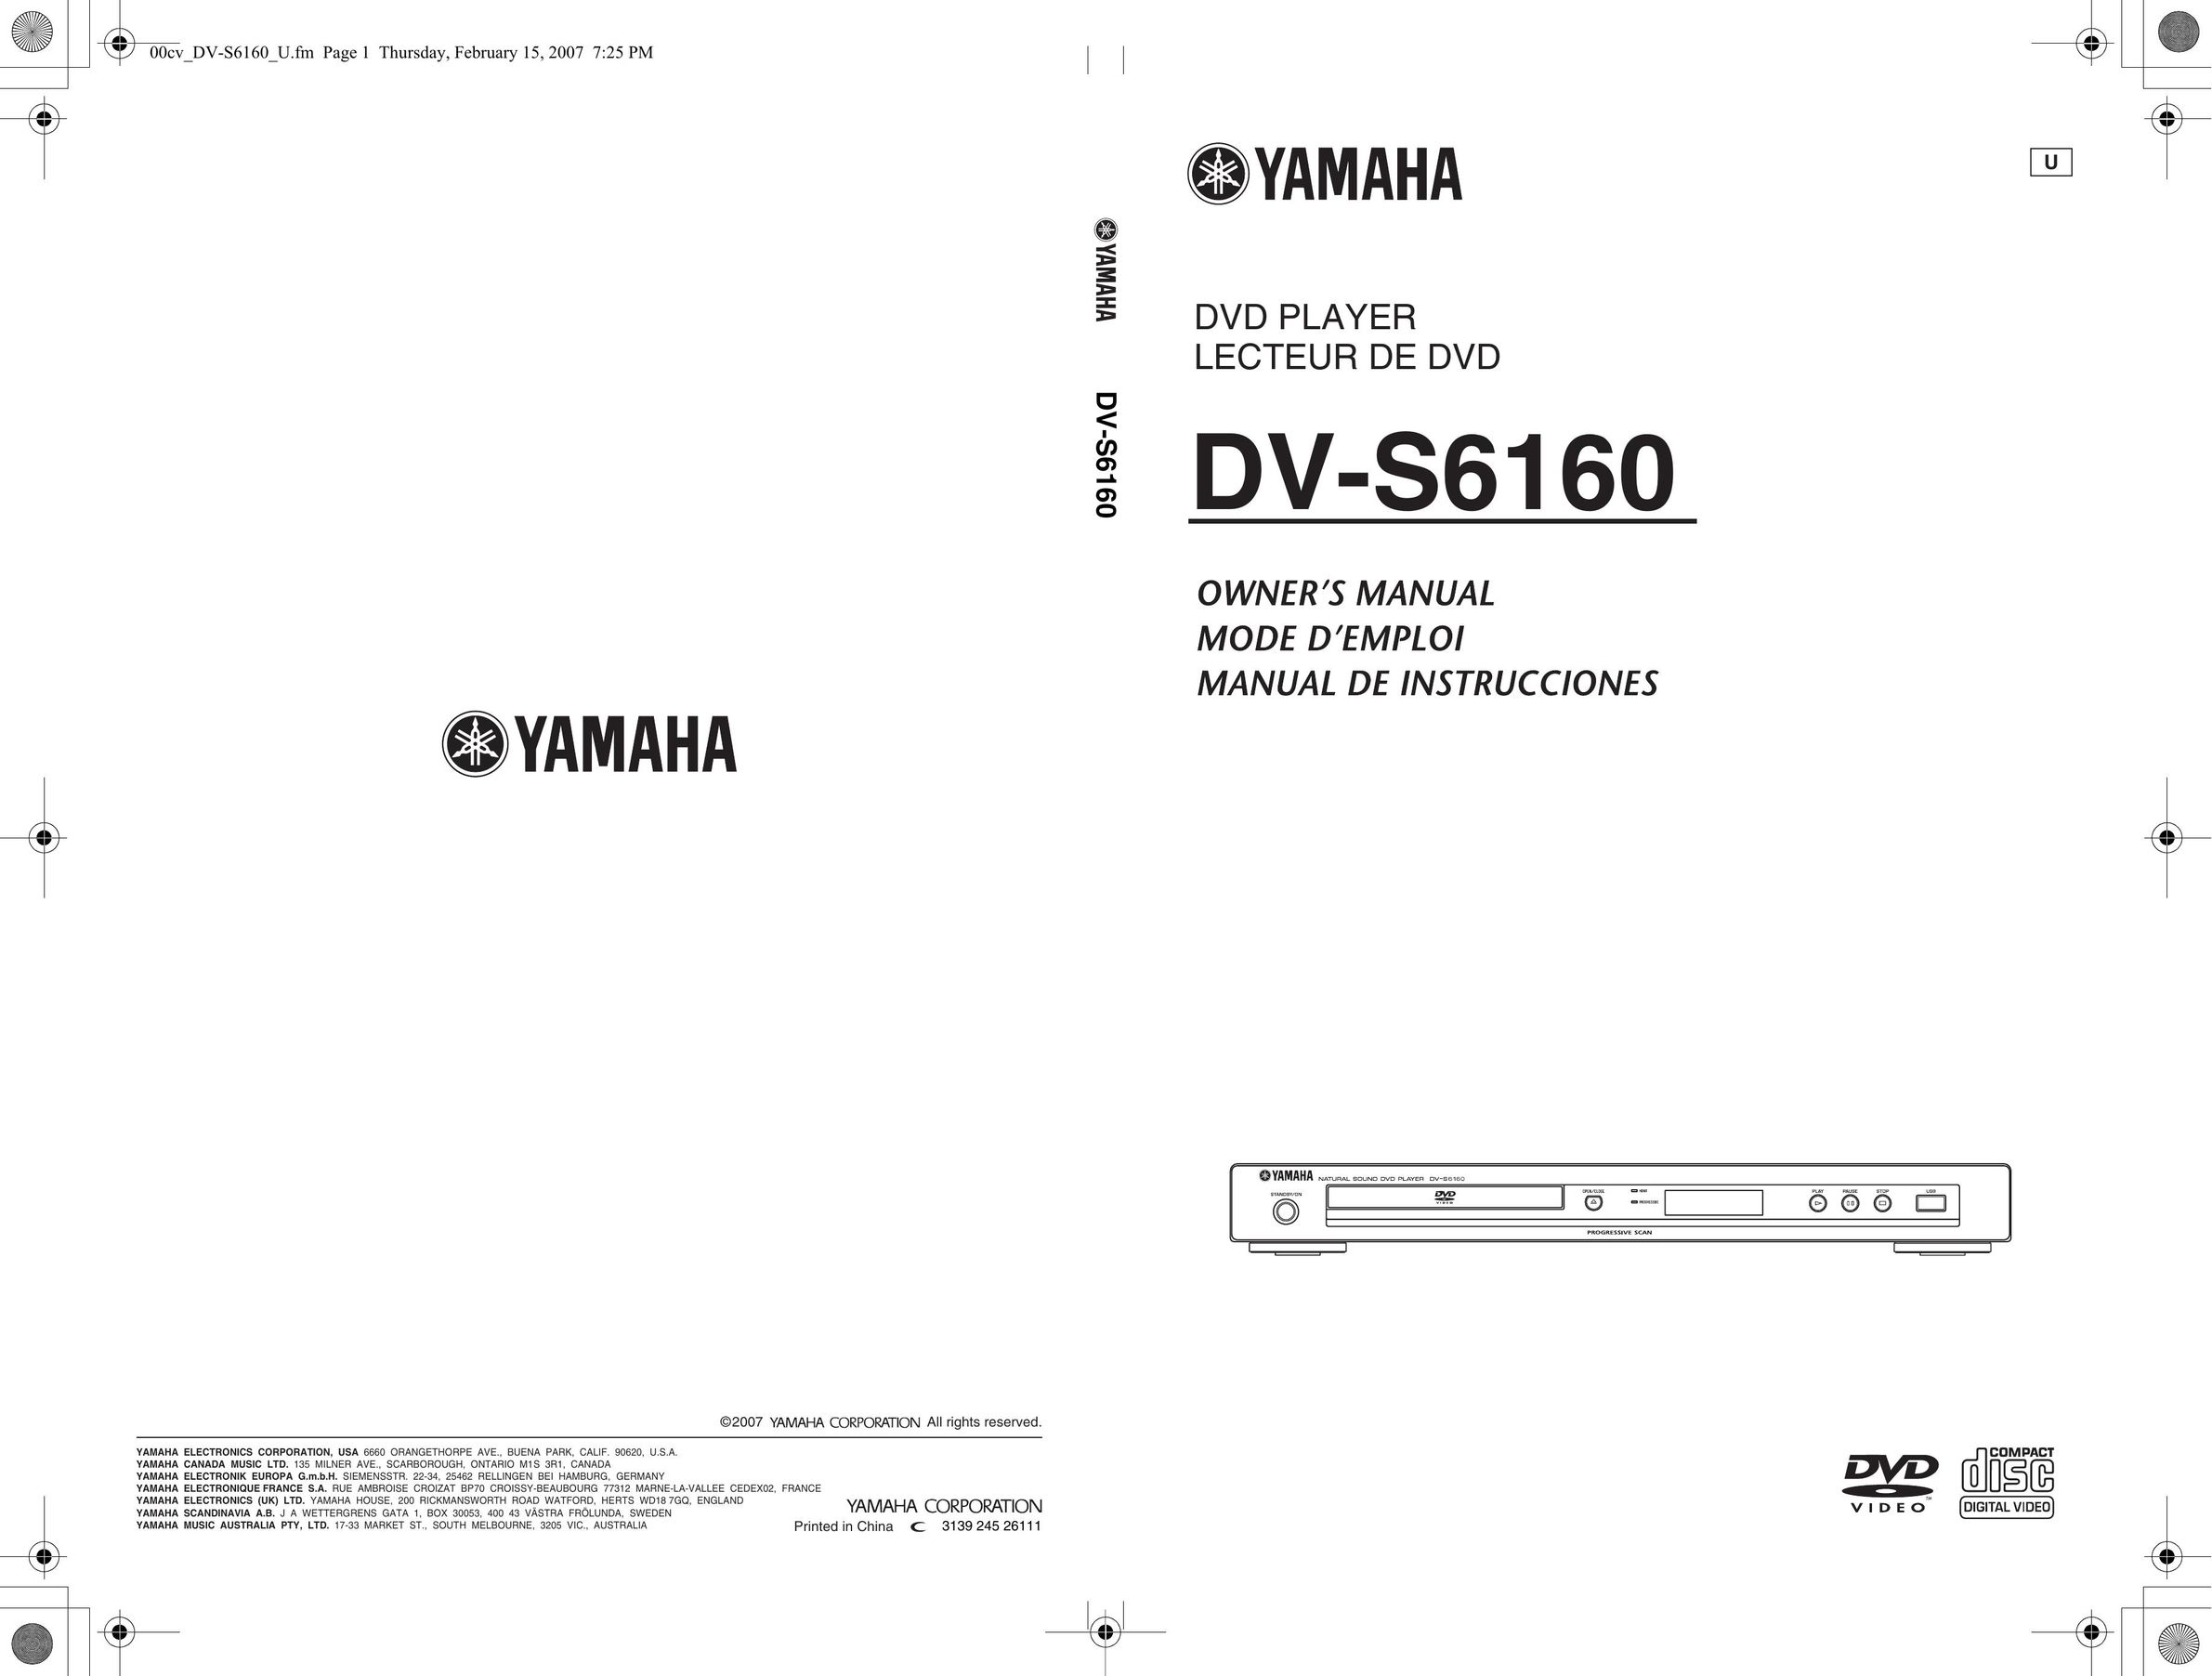 Yamaha DV-S6160 DVD Player User Manual